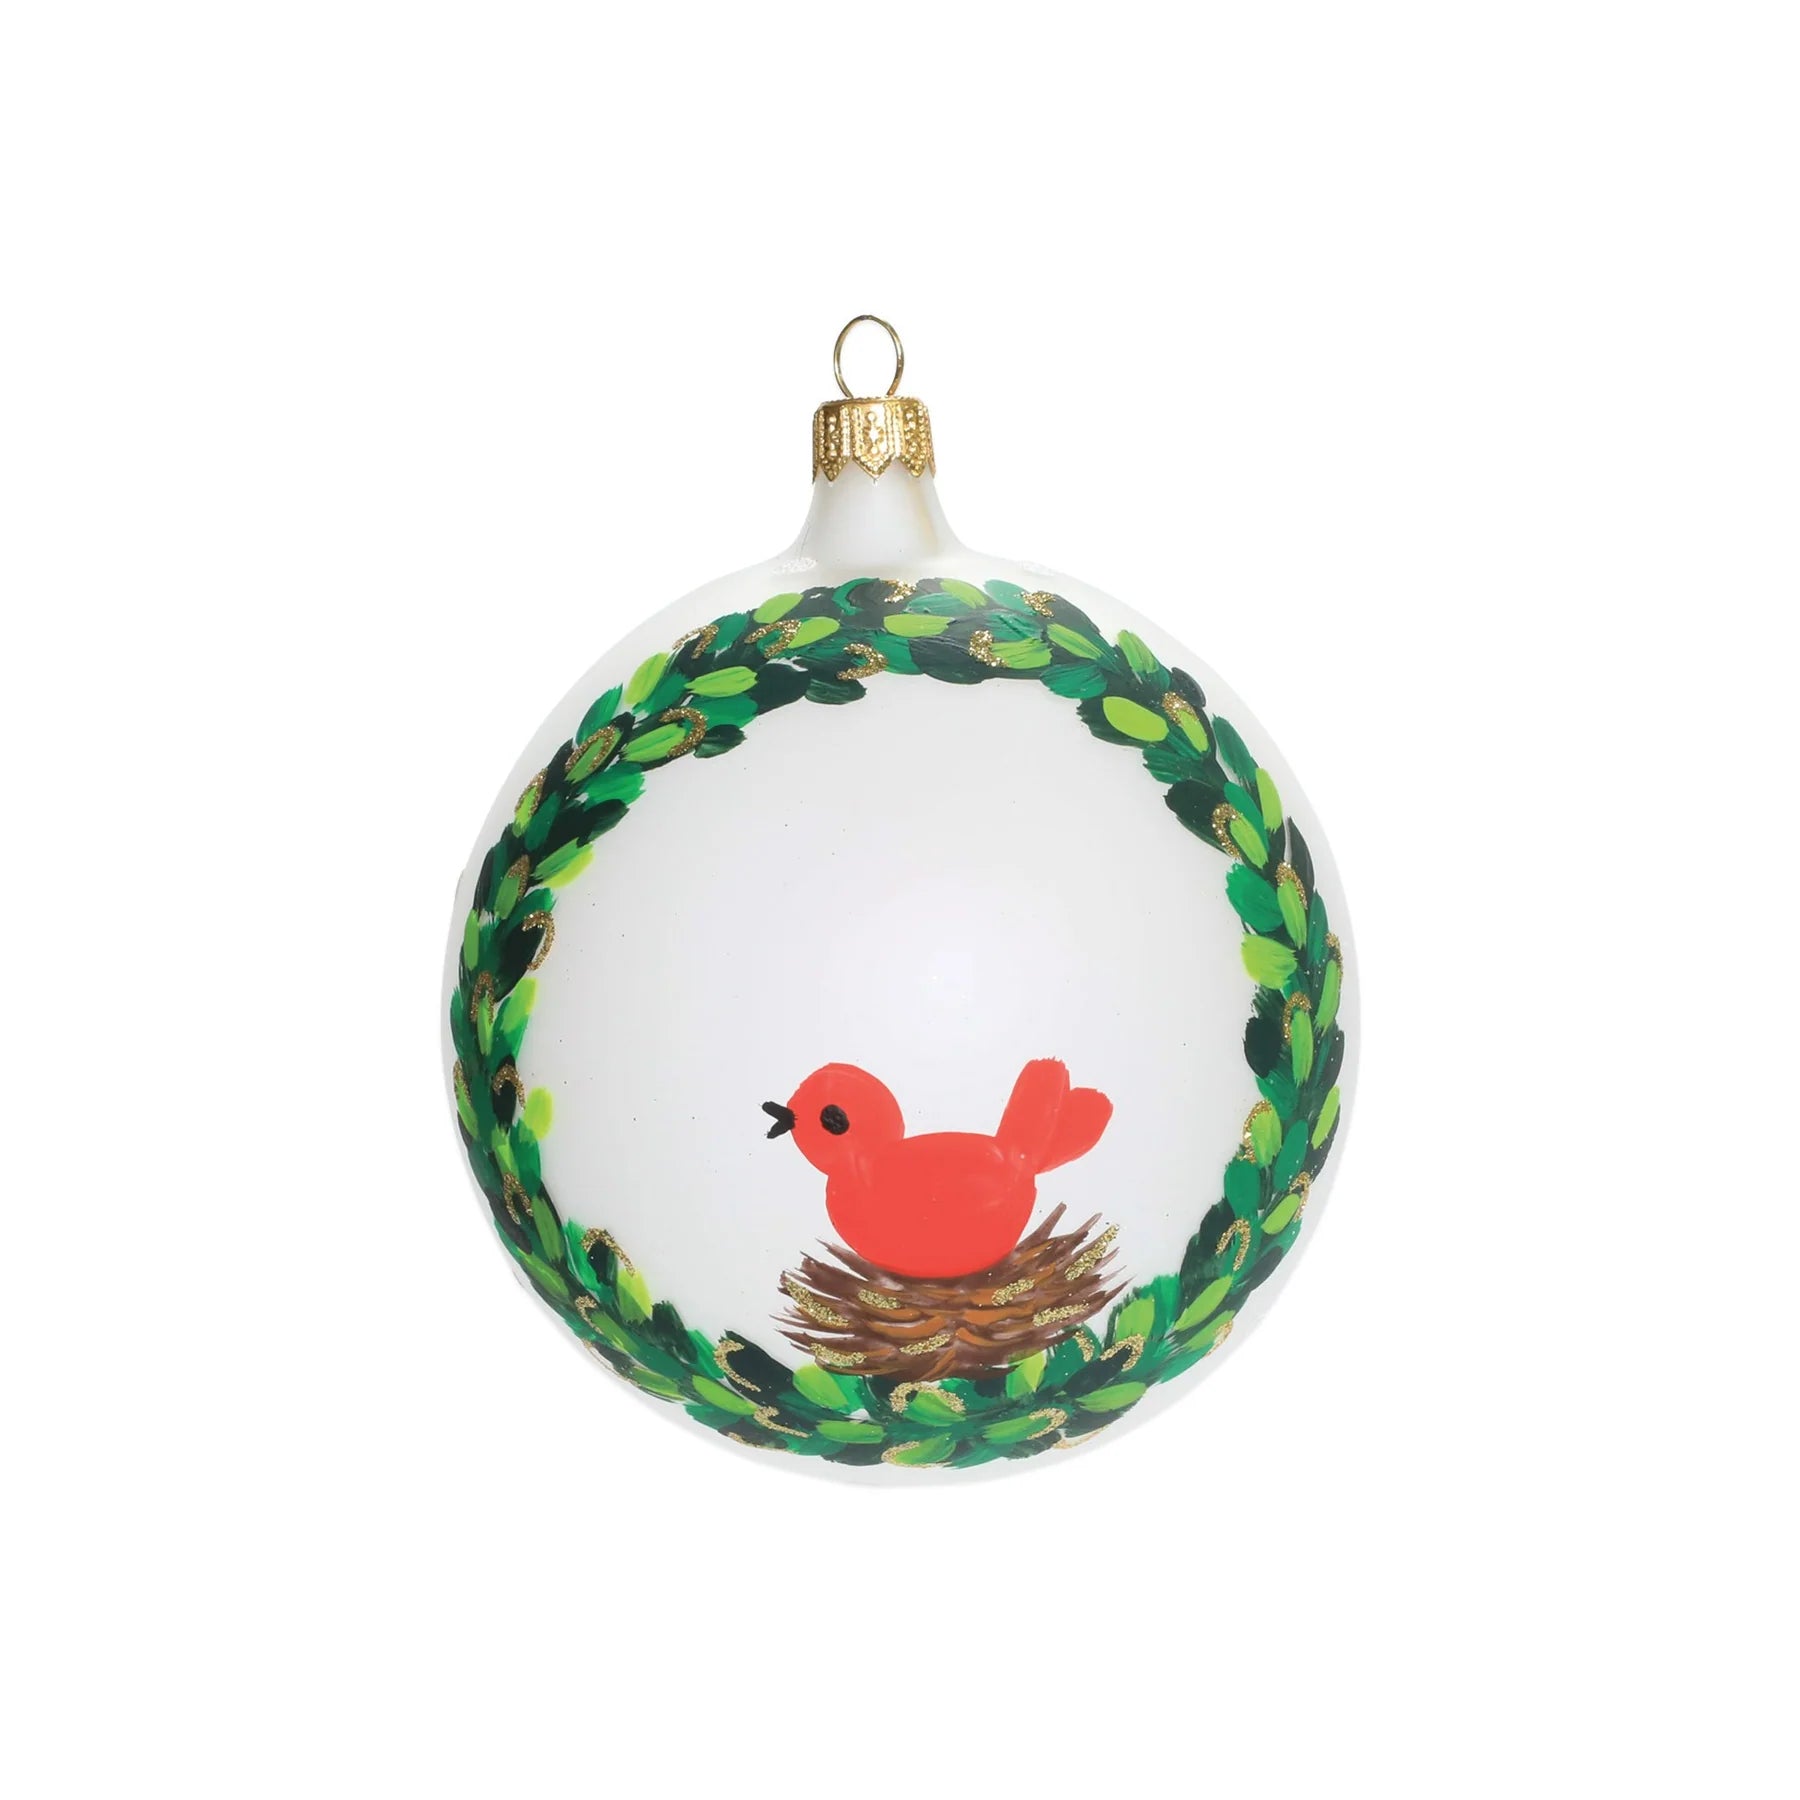 Vietri Red Bird Ornaments Set